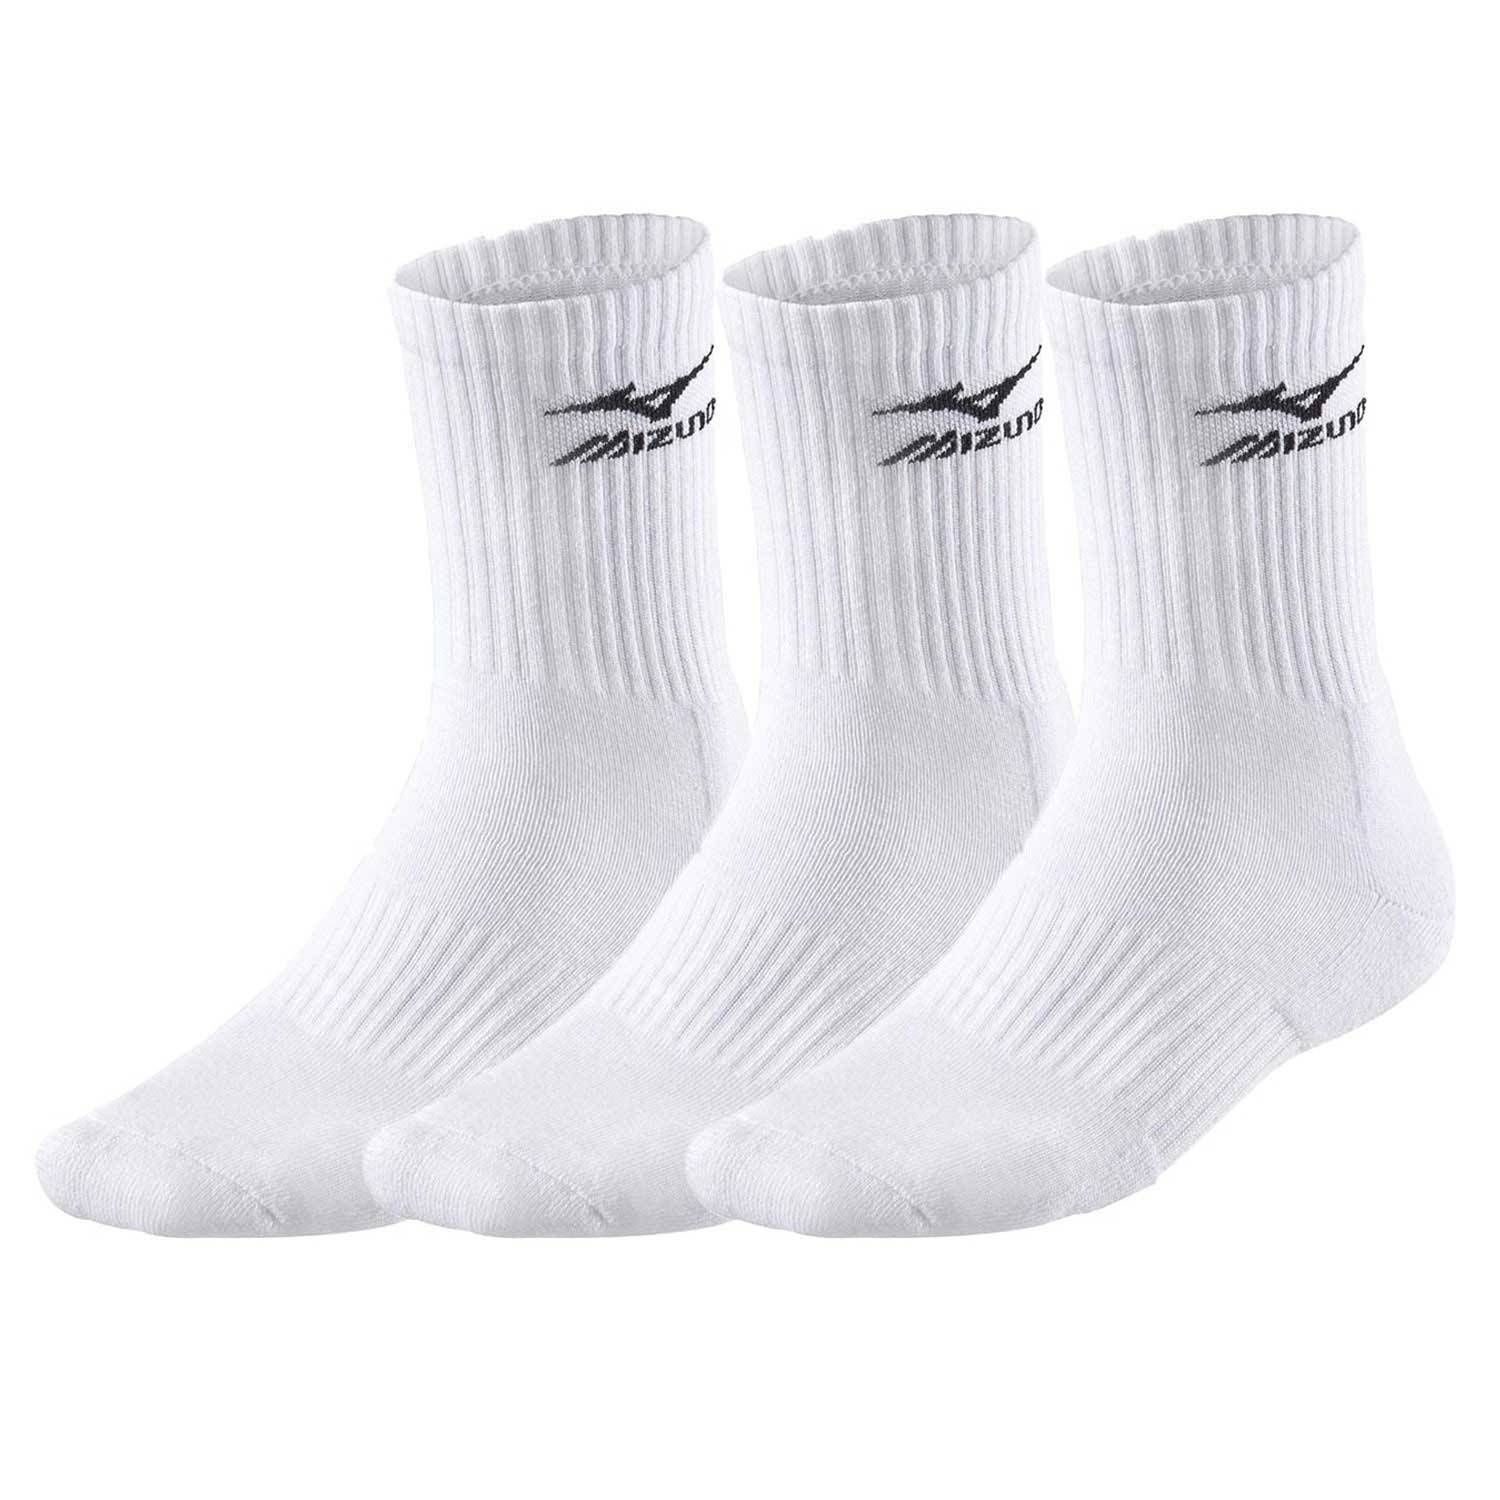 Mizuno DryLite Training Socks White (3 paia)